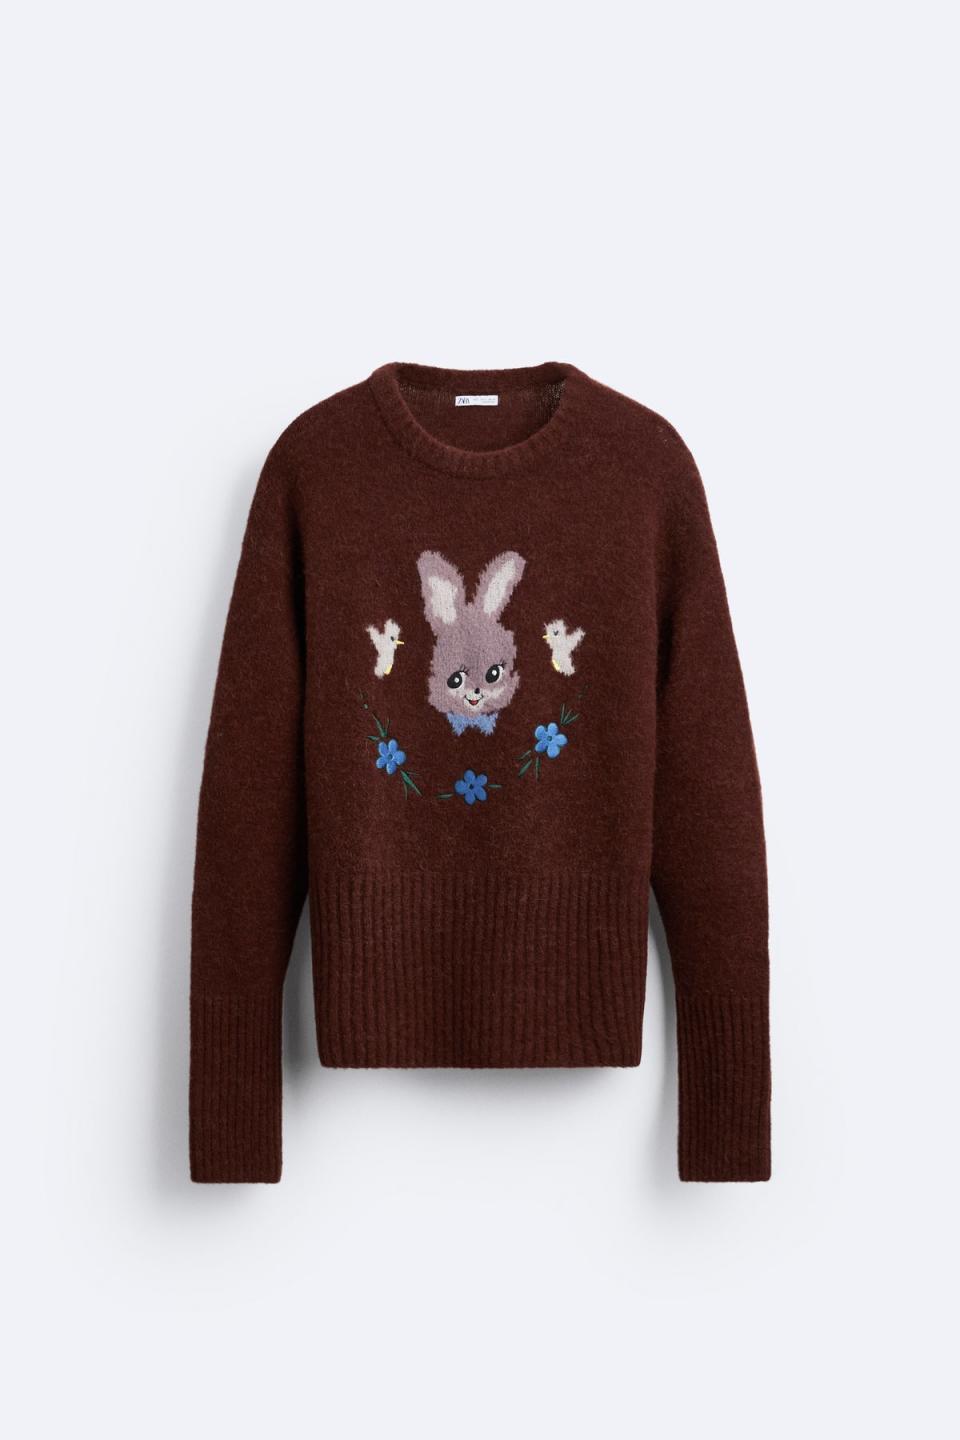 Zara + Harry Lambert, cropped fit sweater, £59.99, zara.com (Zara + Harry Lambert)